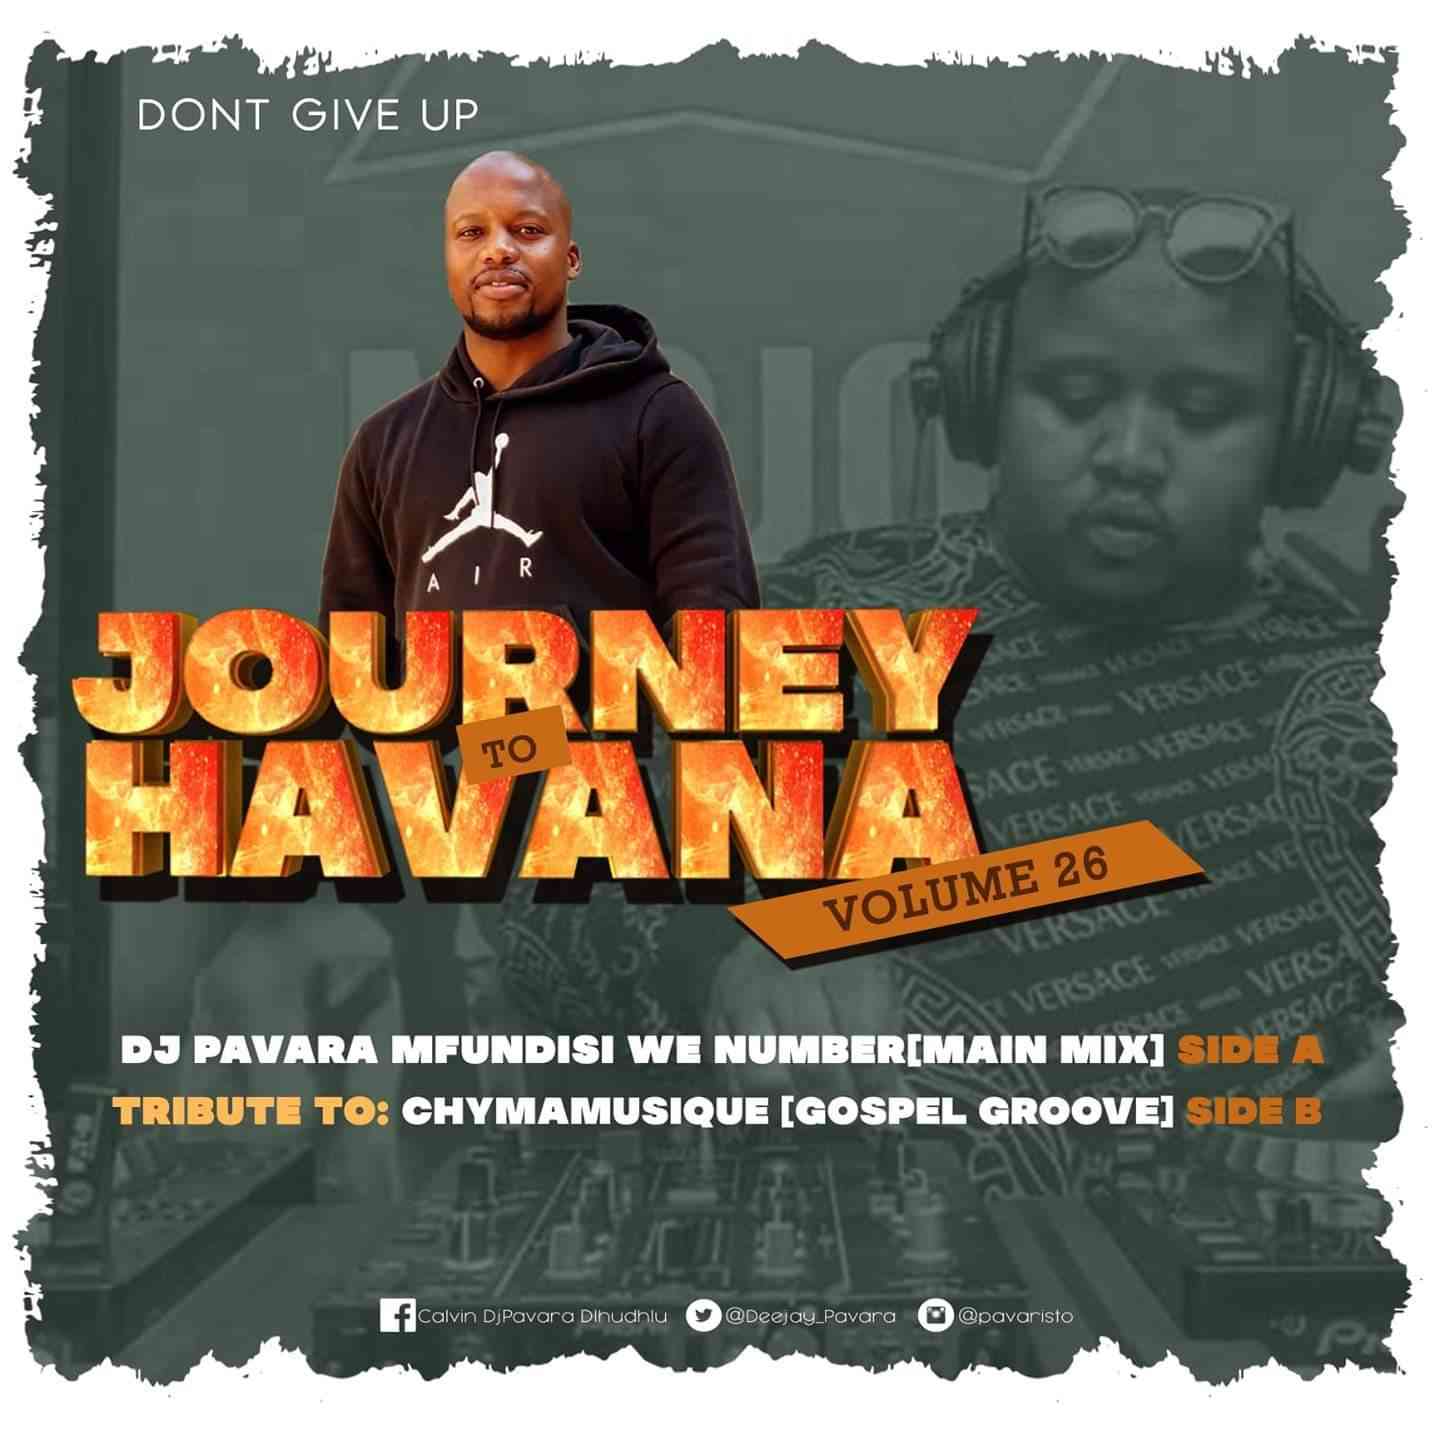 Dj Pavara (Mfundisi we Number) Journey to Havana Vol. 26 Mix